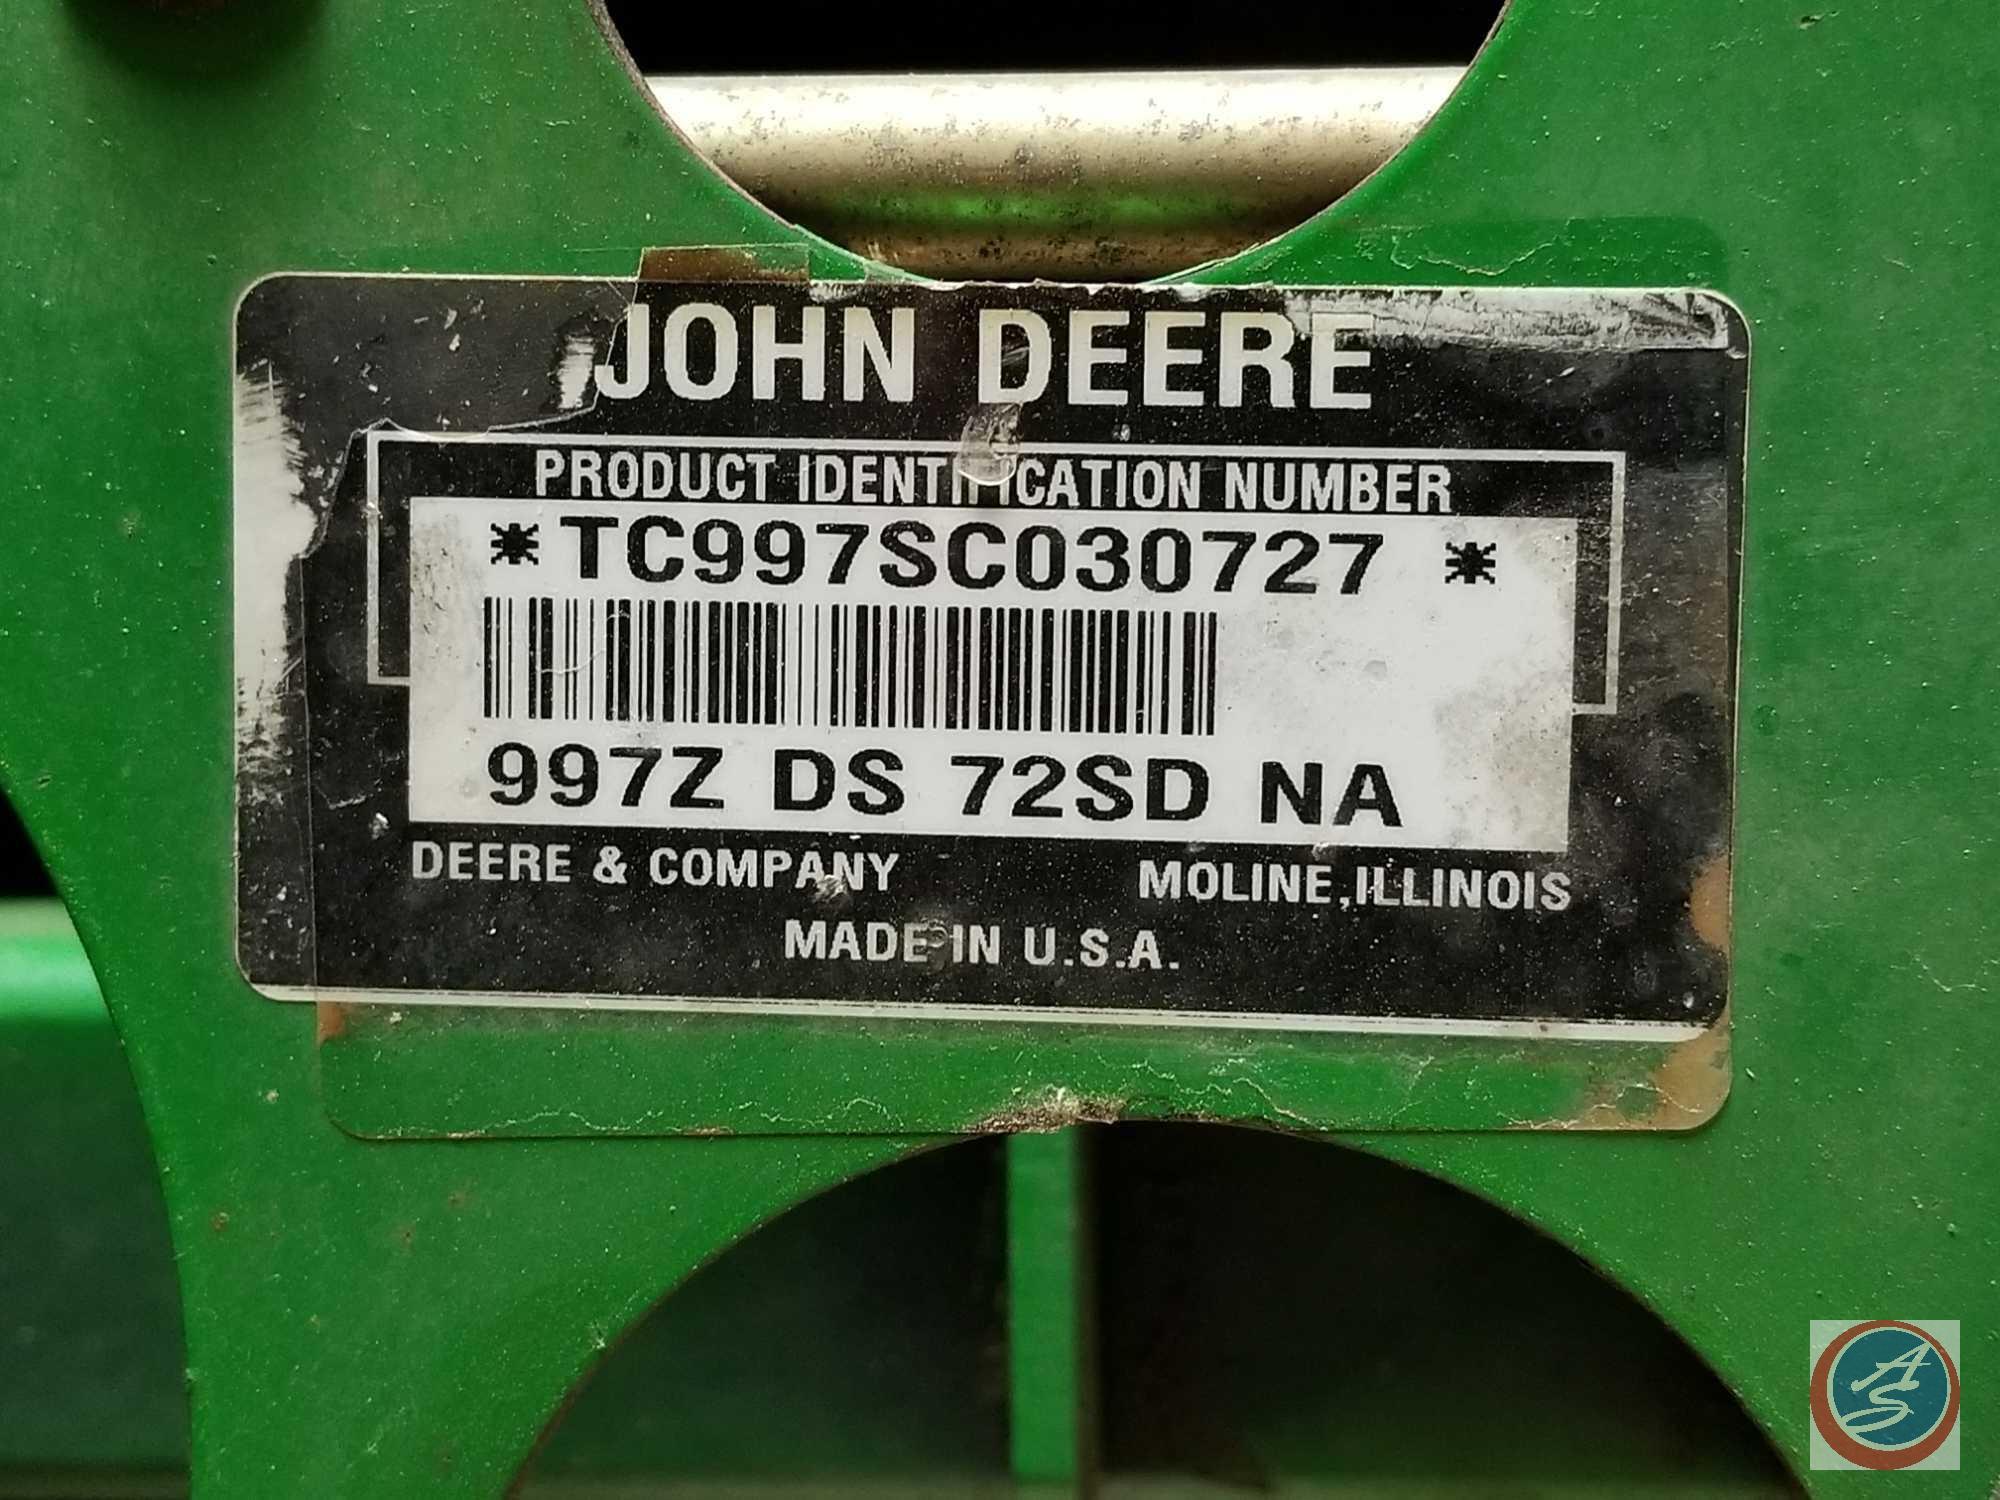 John Deere 997 72 inch Z-Turn TC997SC030727 3126.9 hrs.